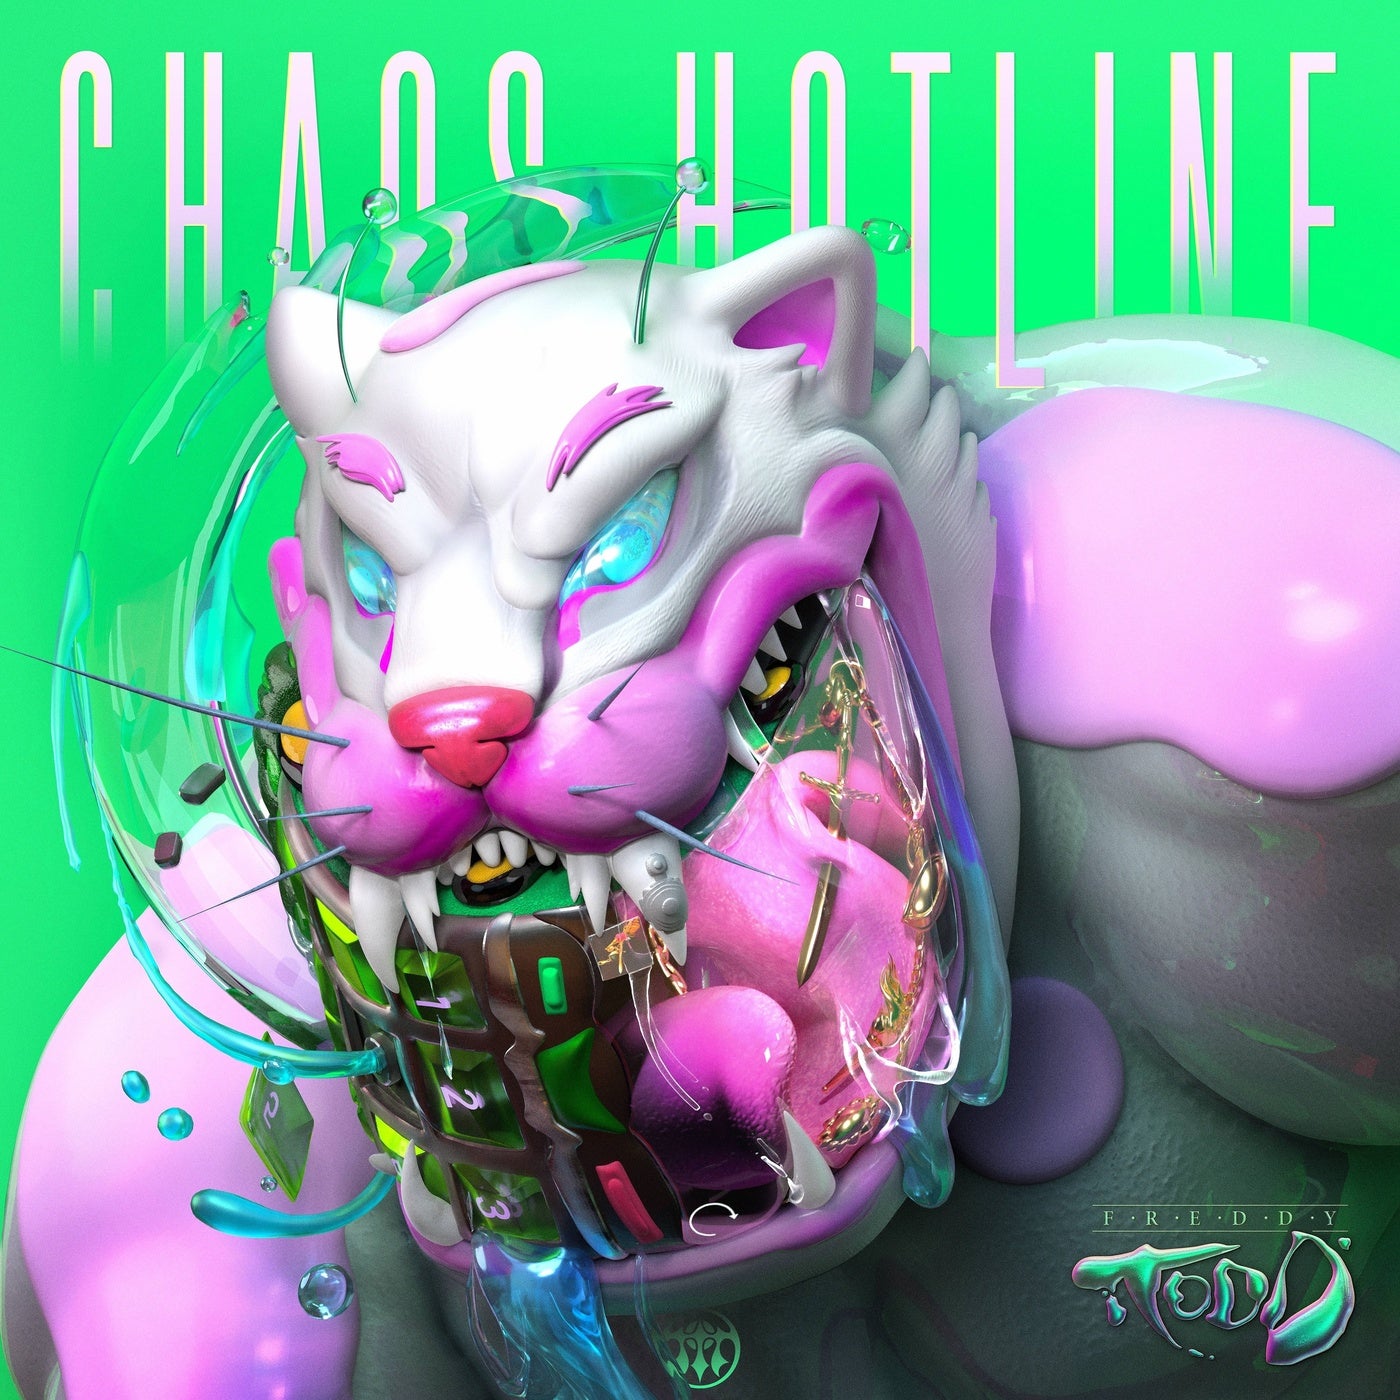 Chaos Hotline